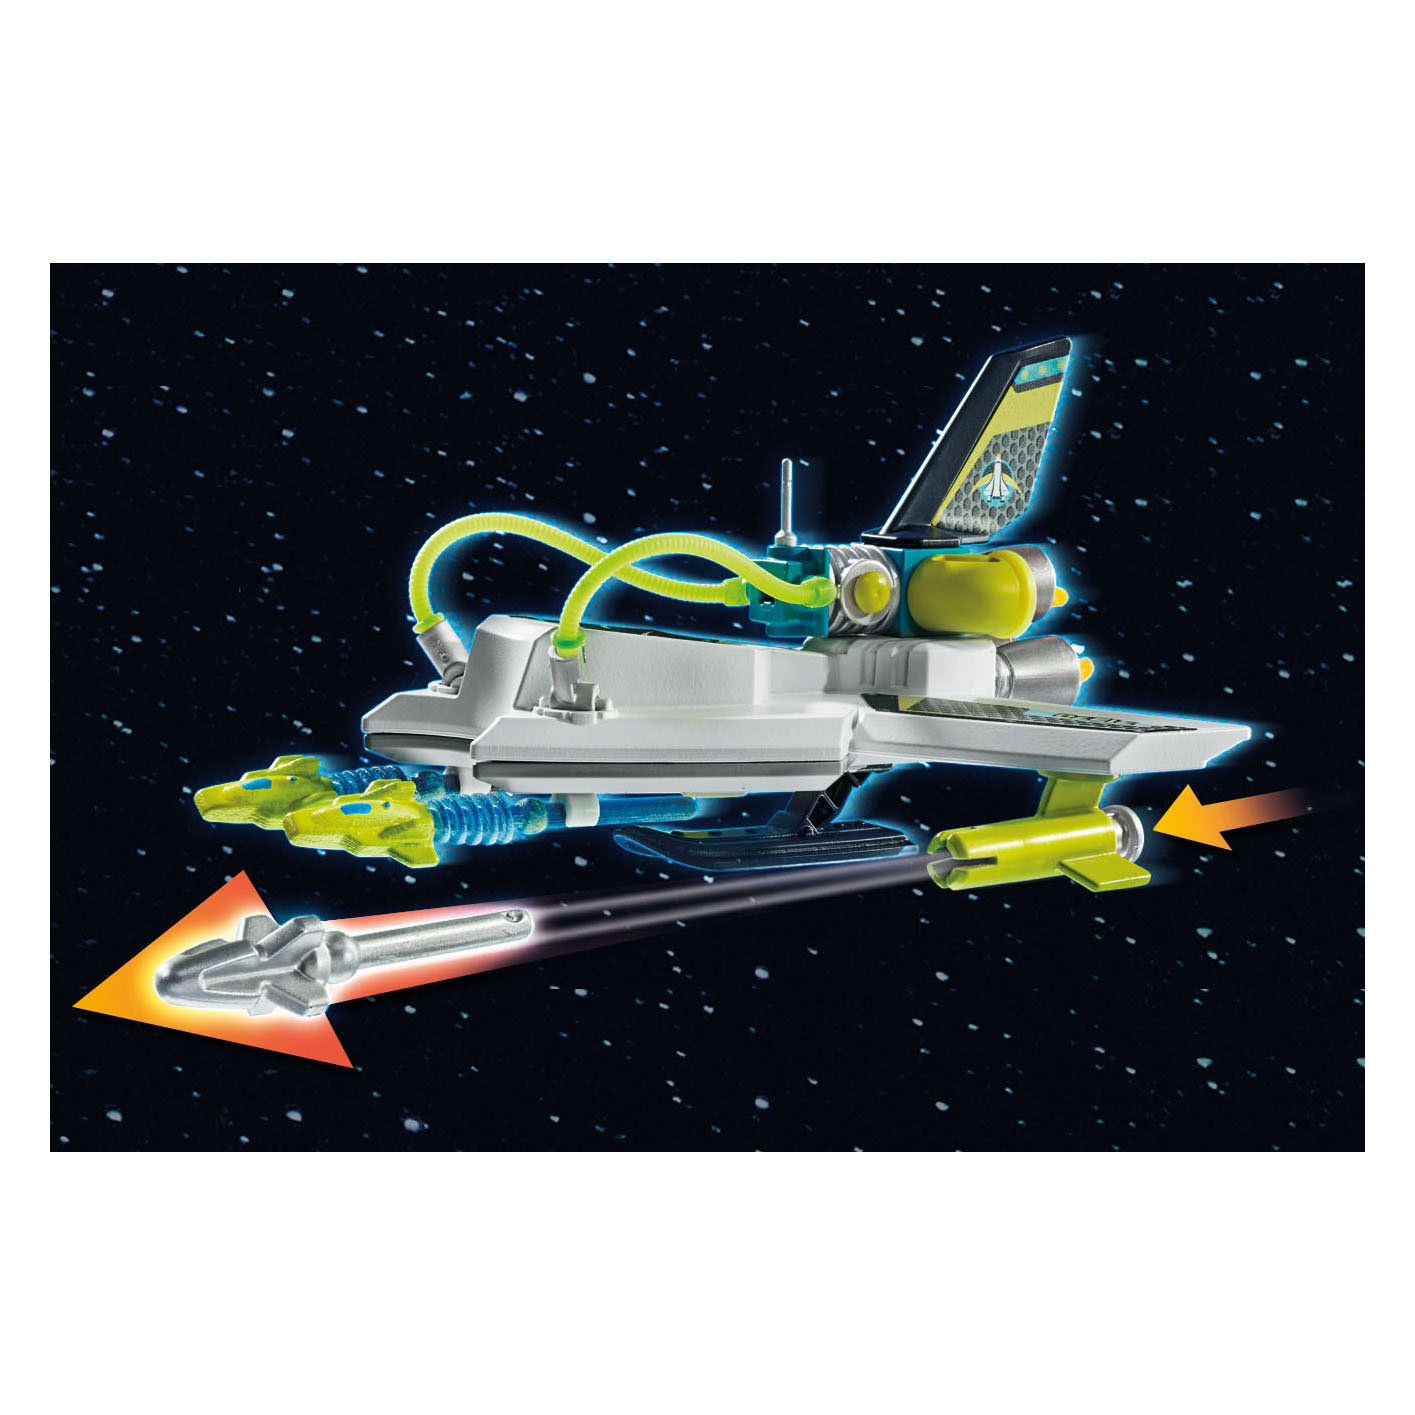 Playmobil Ruimtevaart High-tech Ruimtedrone Promo Pack - 71370